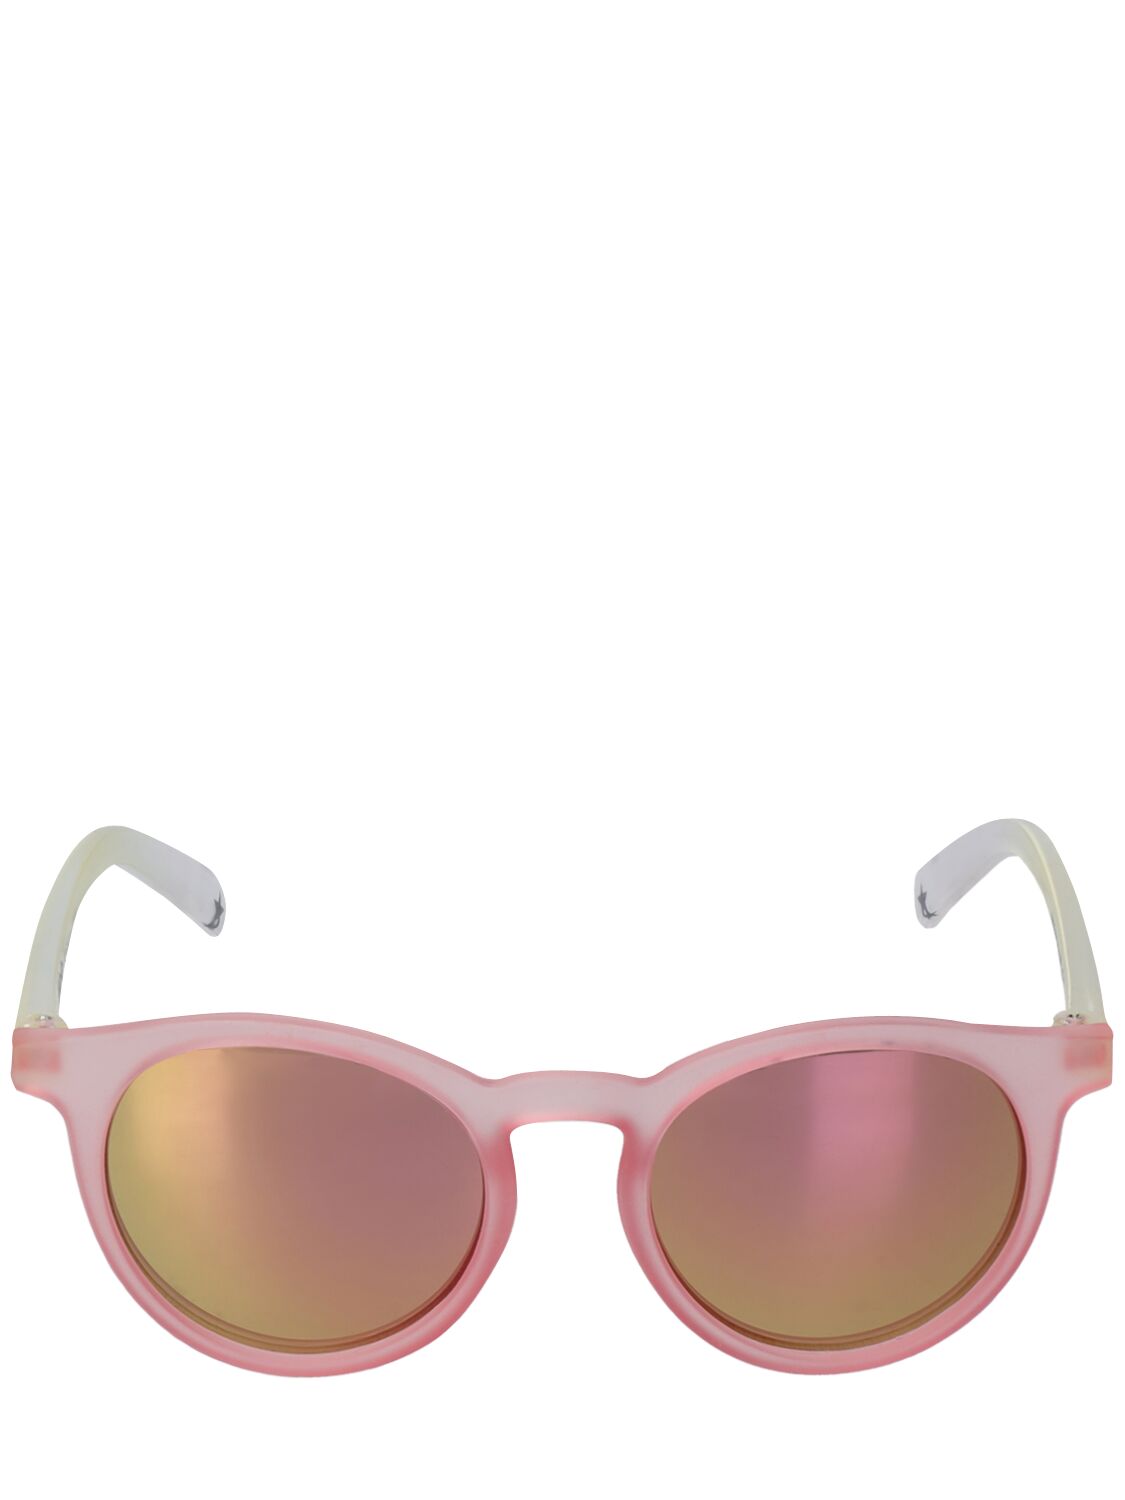 Image of Round Polycarbonate Sunglasses